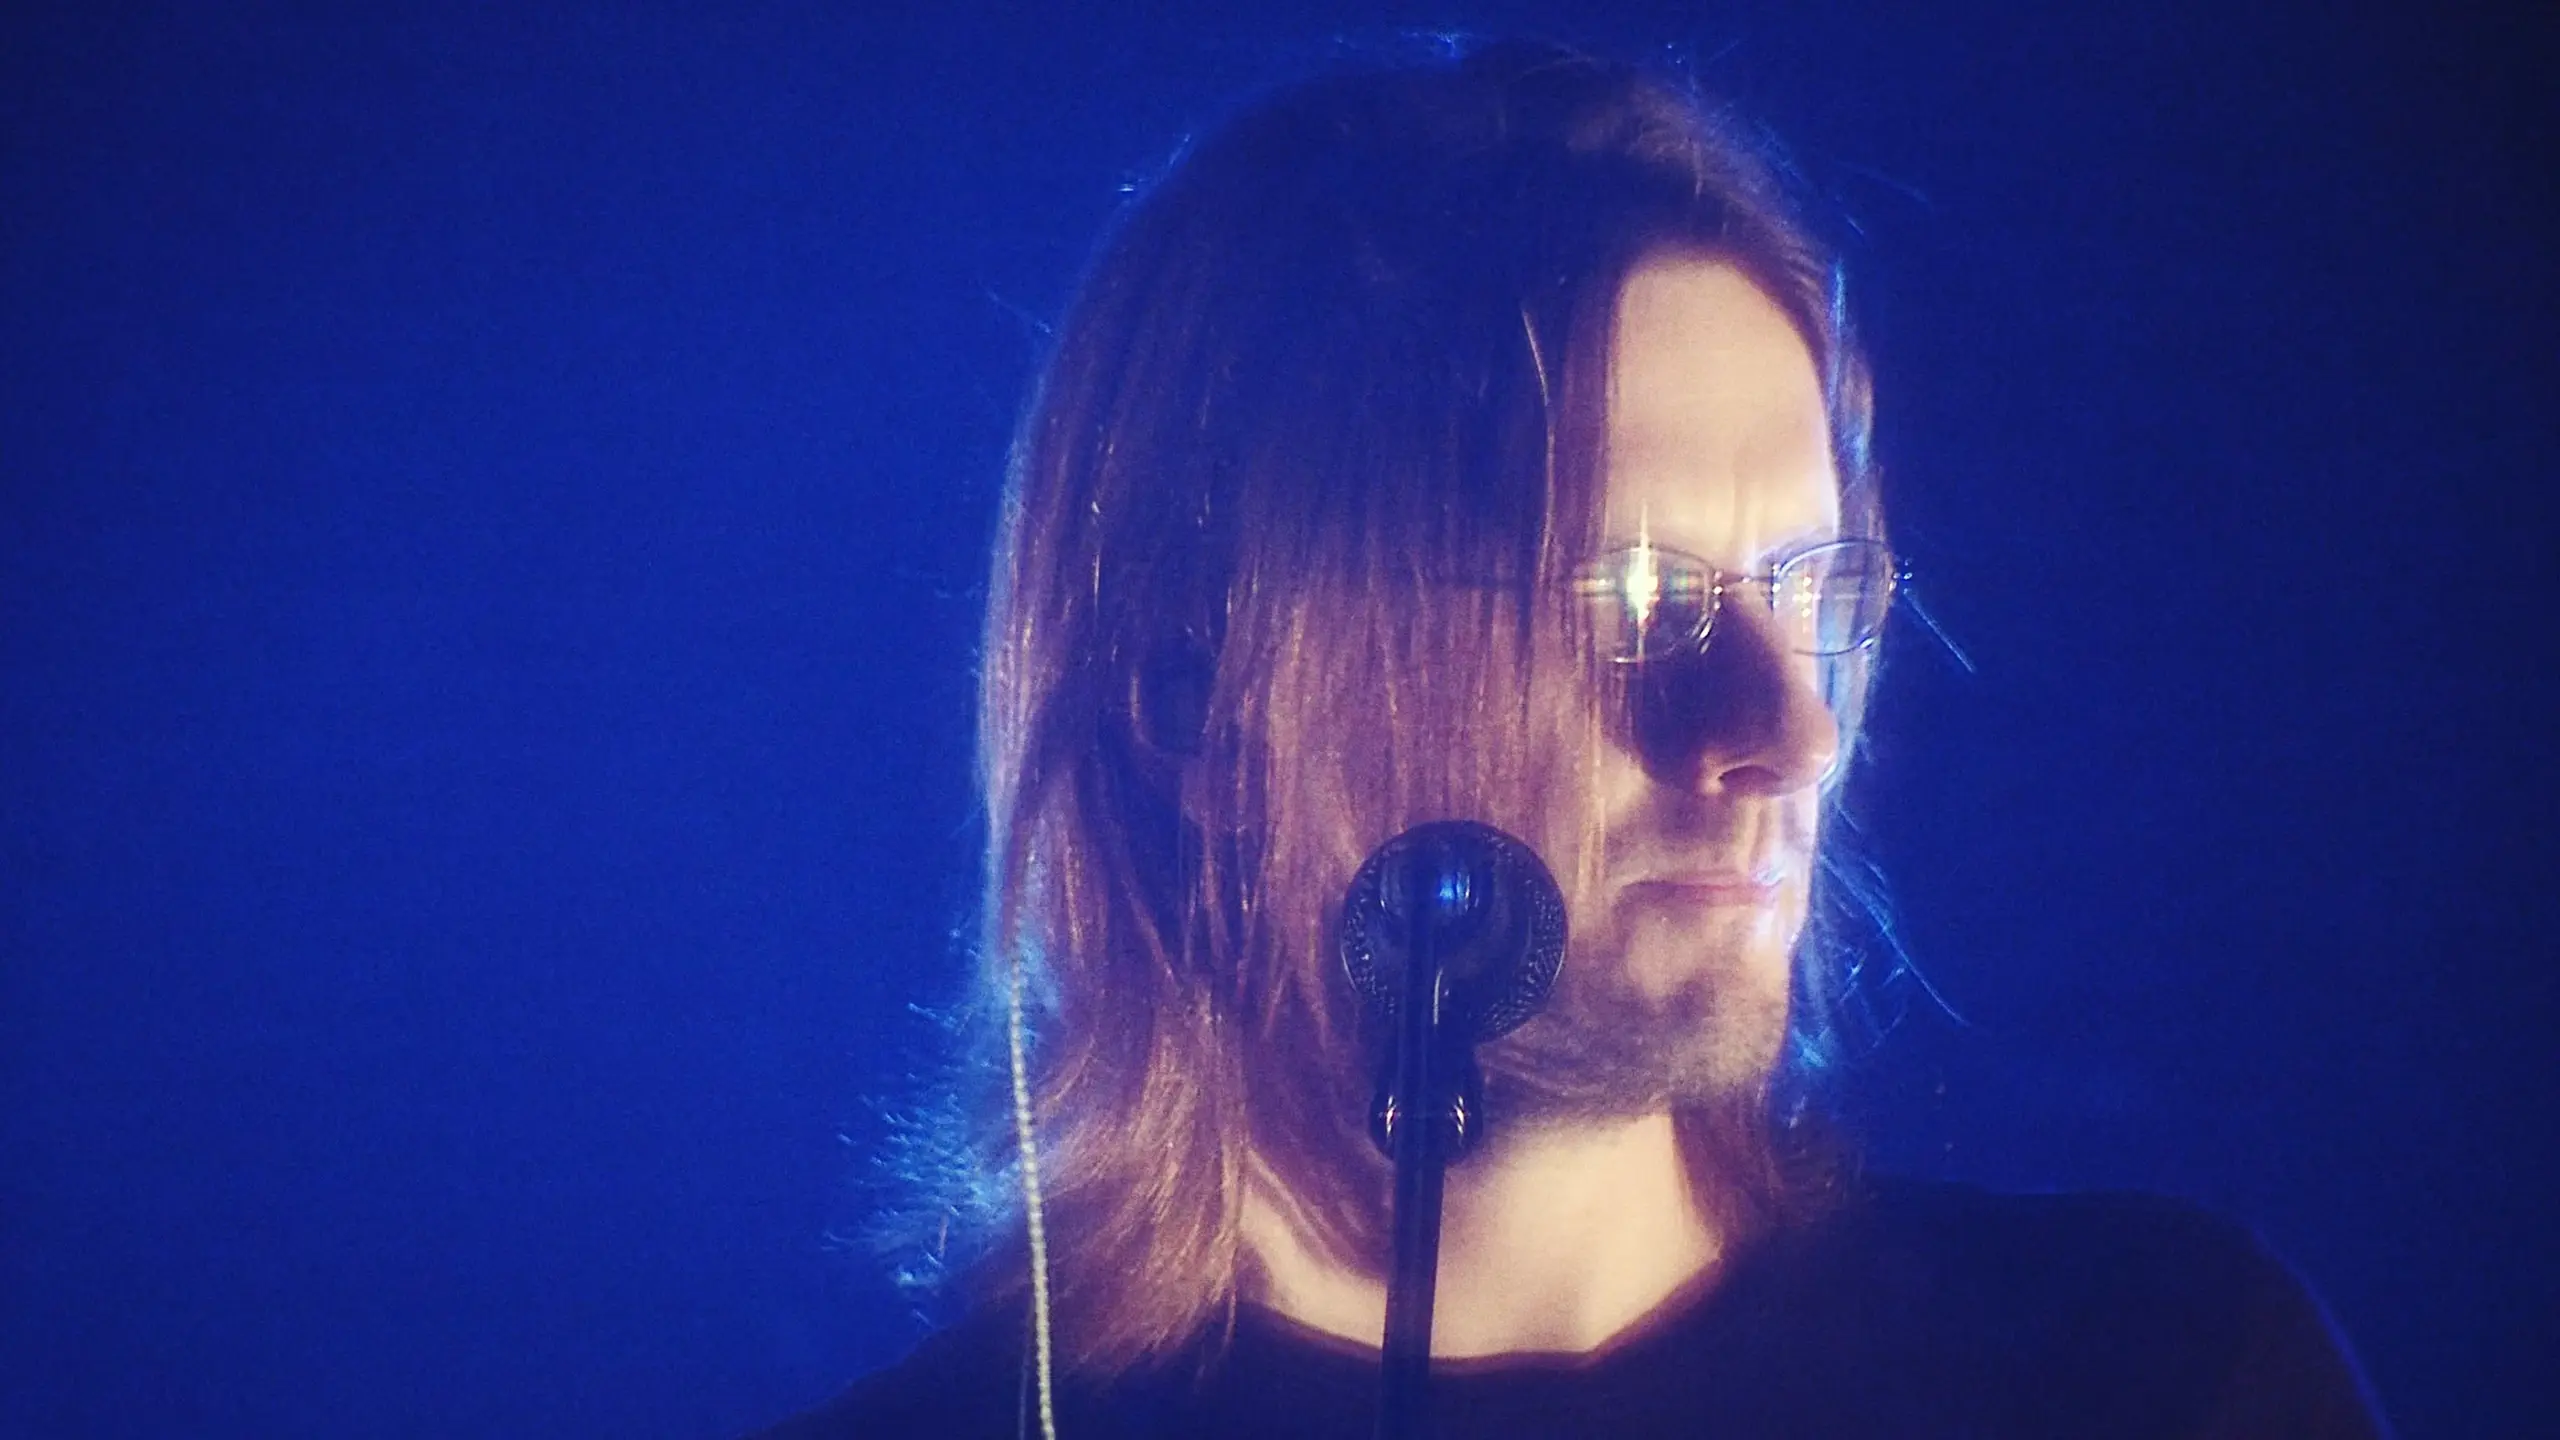 Steven Wilson: Get All You Deserve